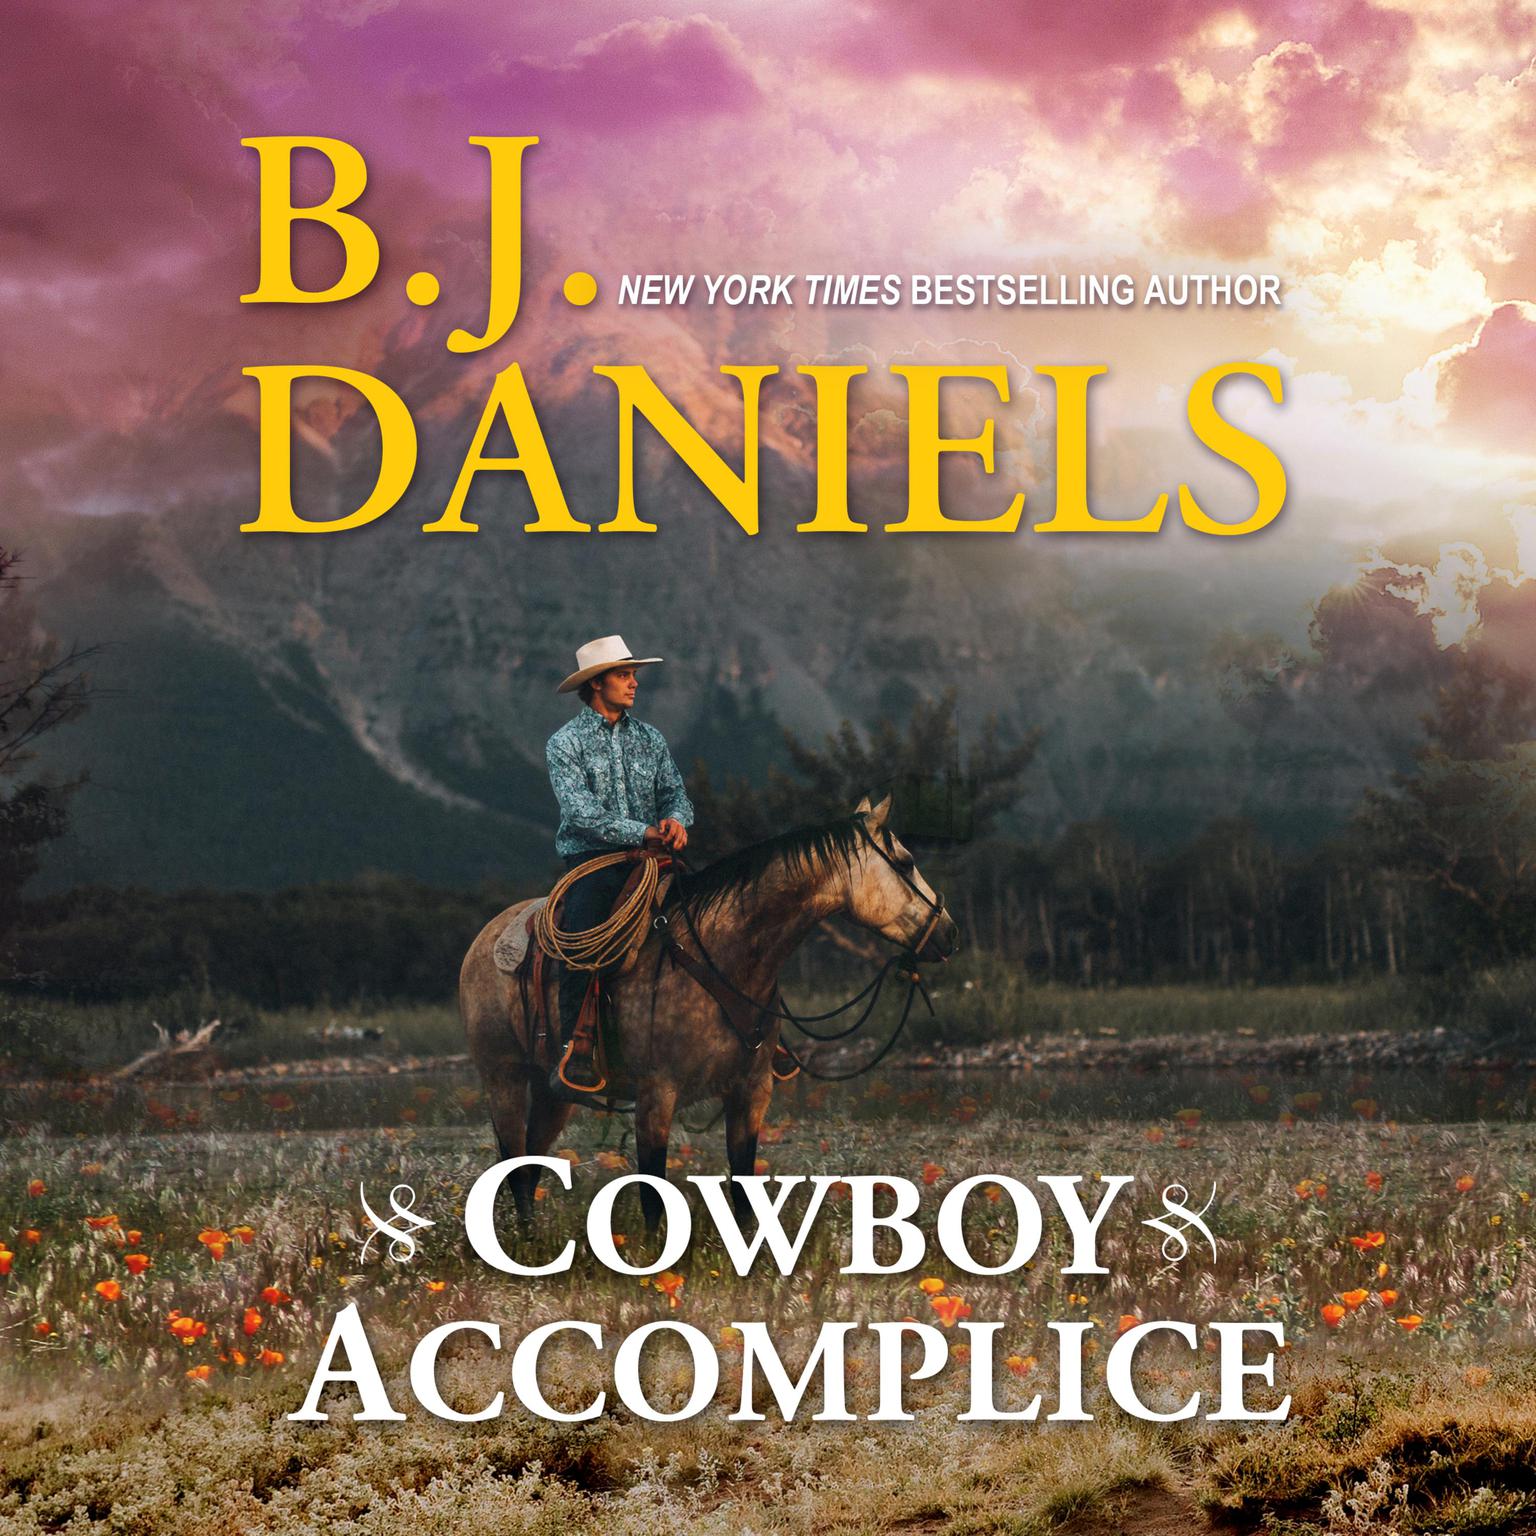 Cowboy Accomplice Audiobook, by B. J. Daniels